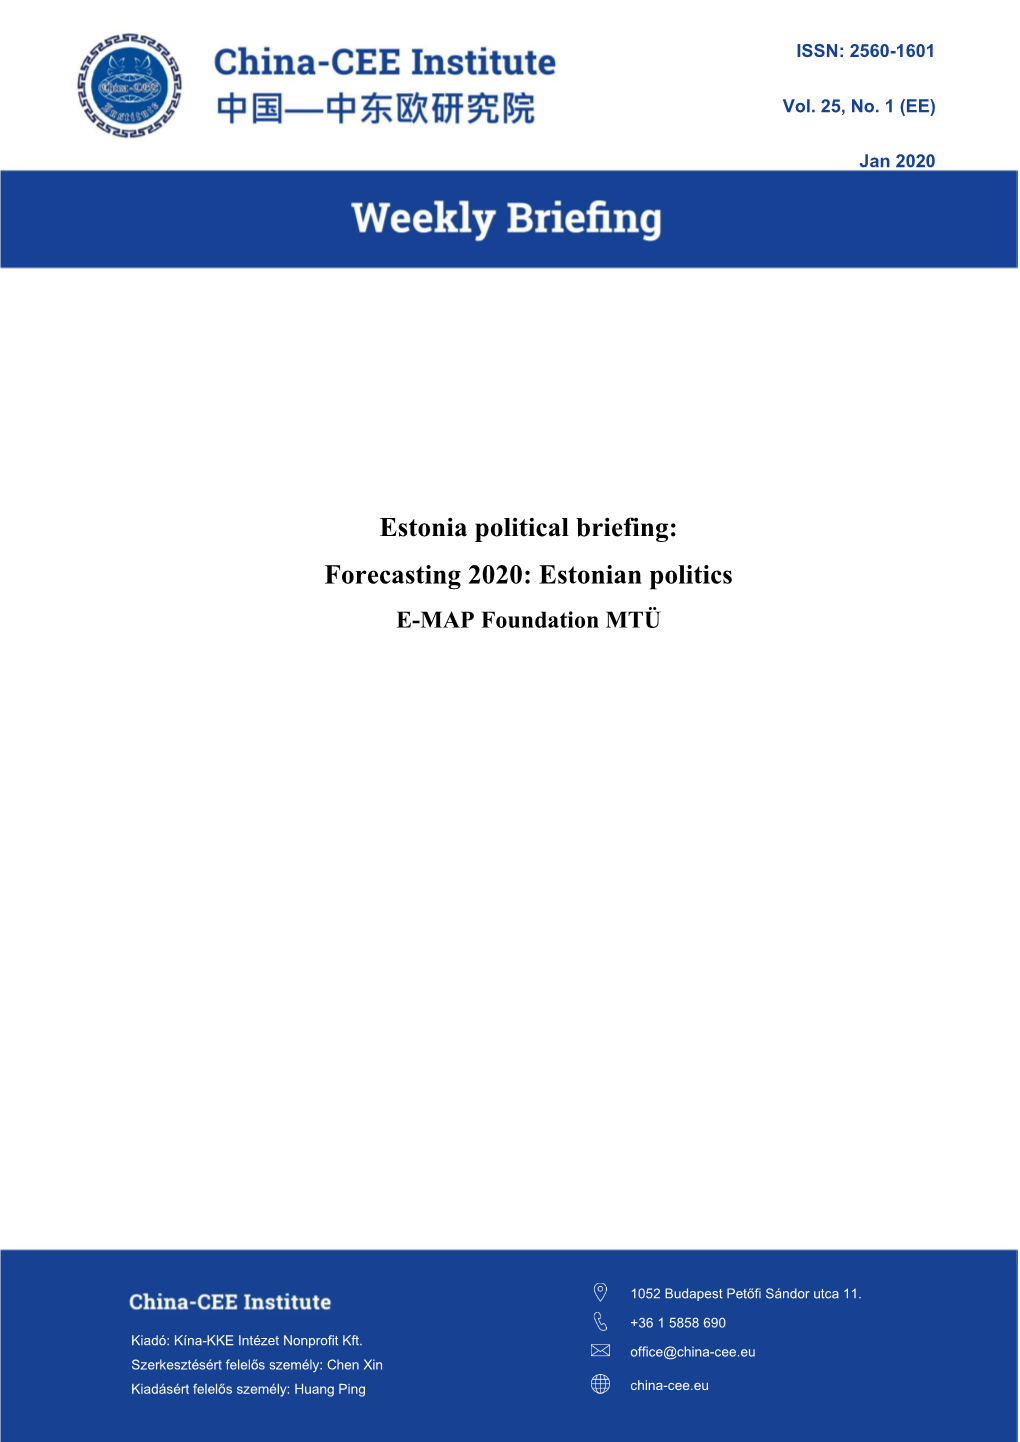 Estonia Political Briefing: Forecasting 2020: Estonian Politics E-MAP Foundation MTÜ